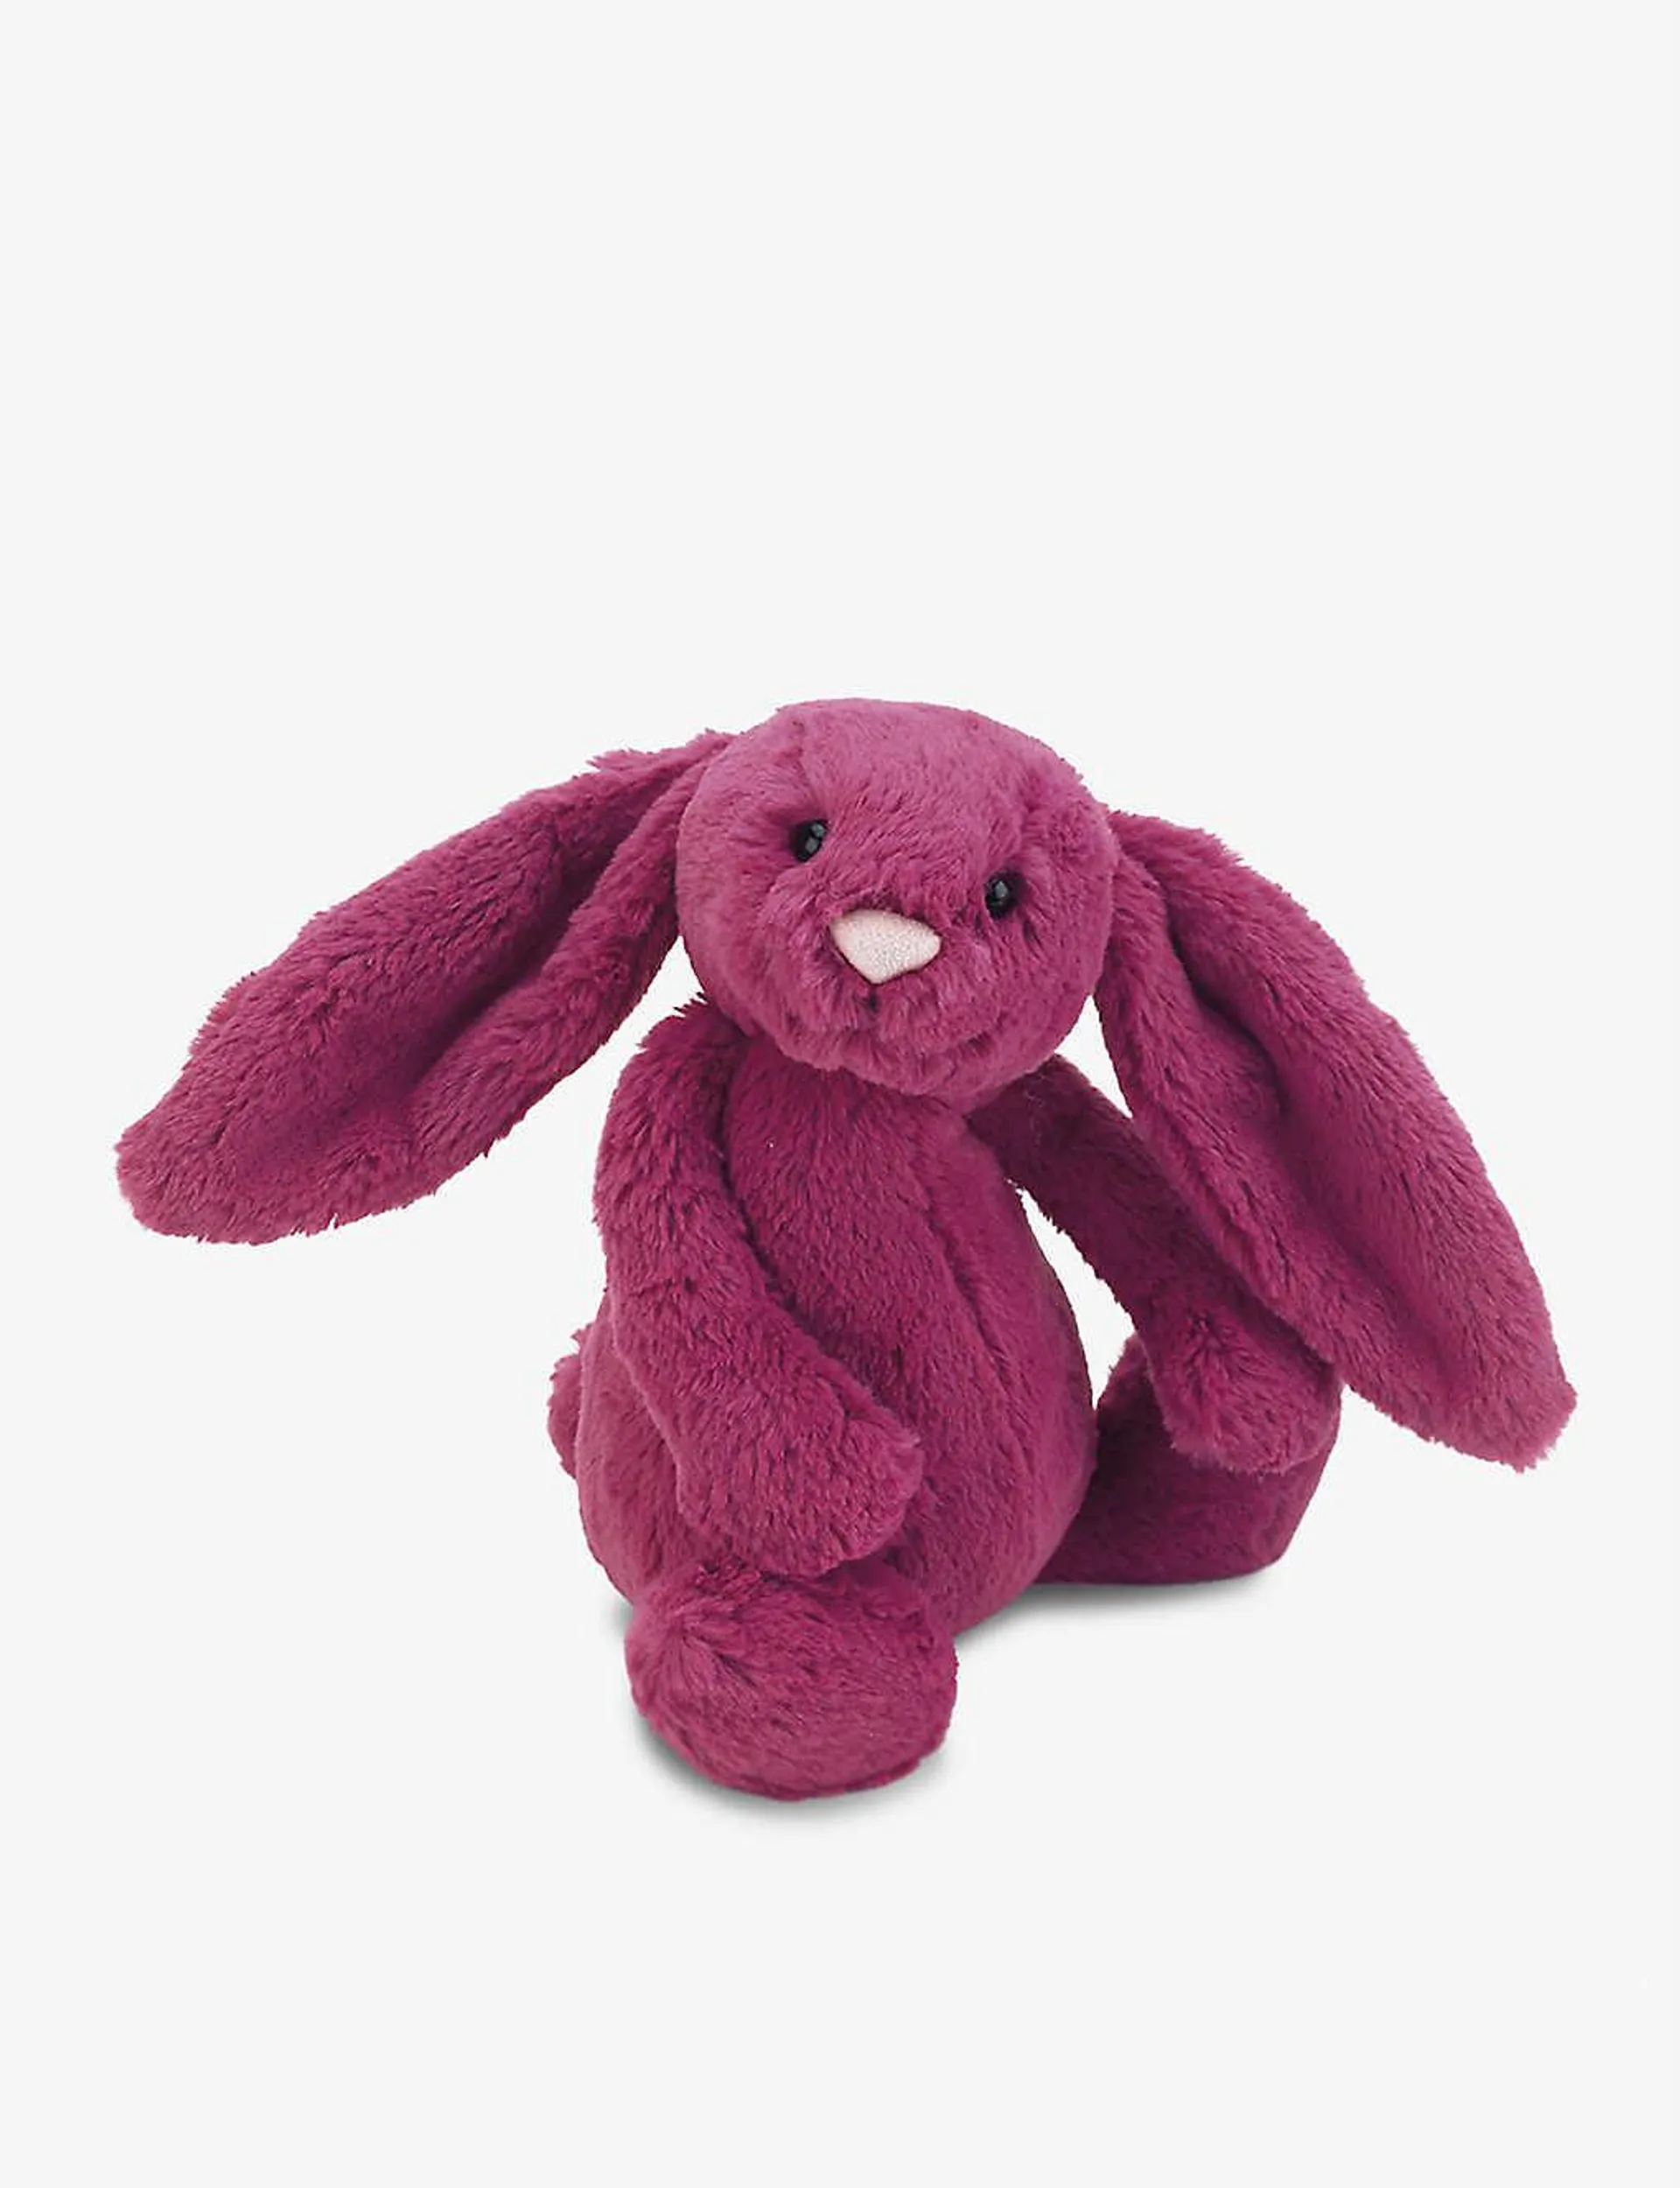 Bashful Rose Bunny medium soft toy 30cm